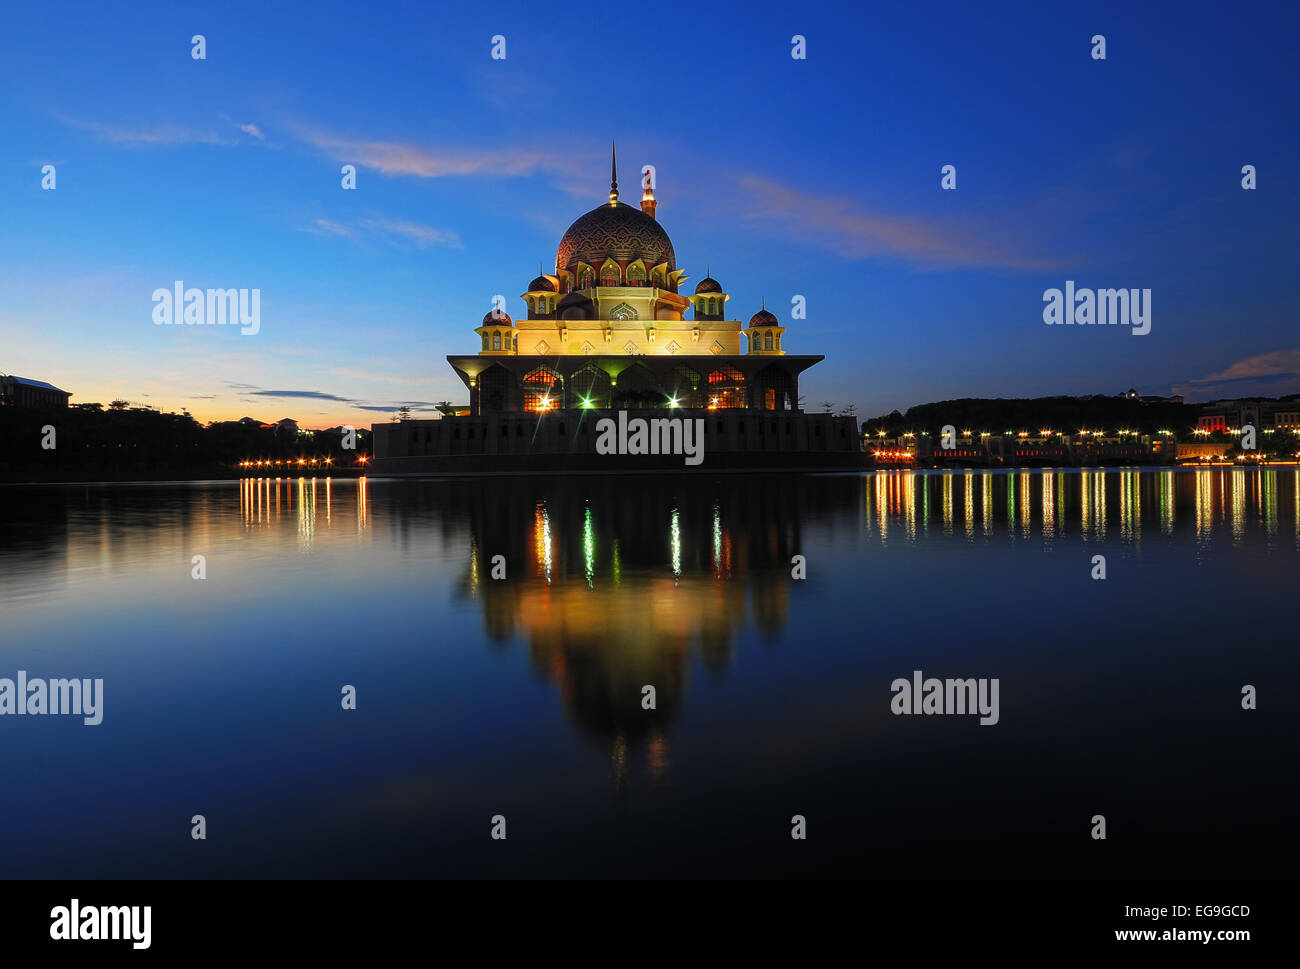 Malaysia, Putrajaya, Mosque reflecting in lake at dusk Stock Photo